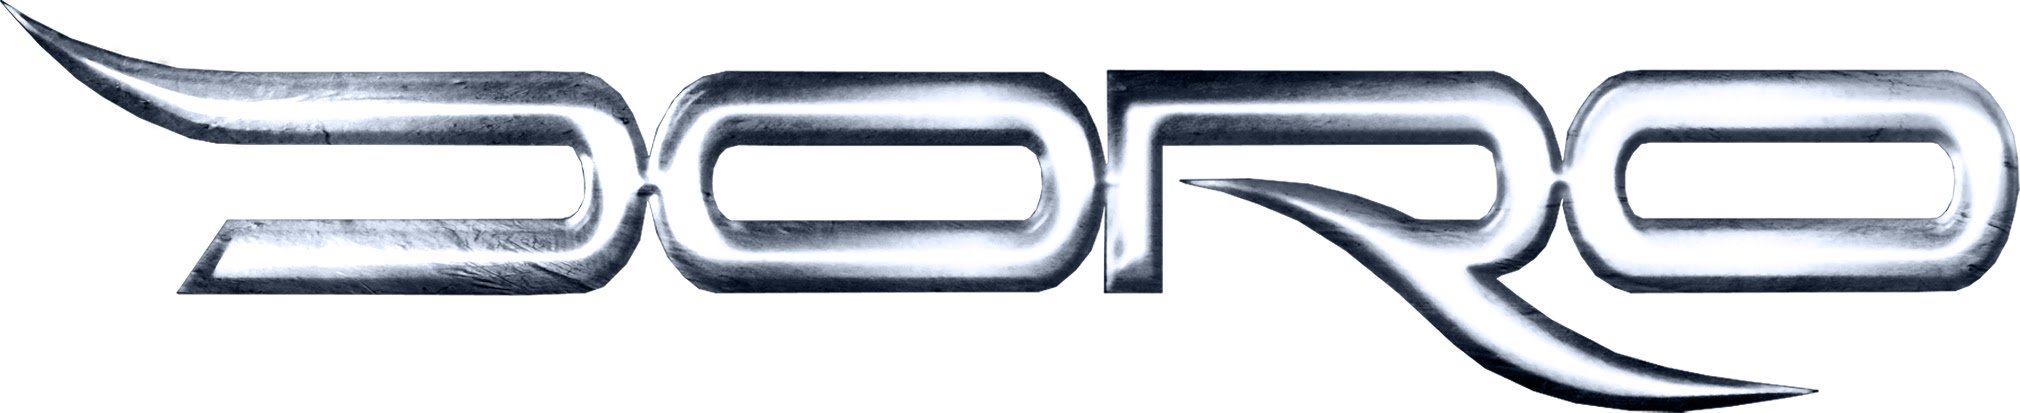 DORO announces new album, celebrating her 40th anniversary - Highwire Daze